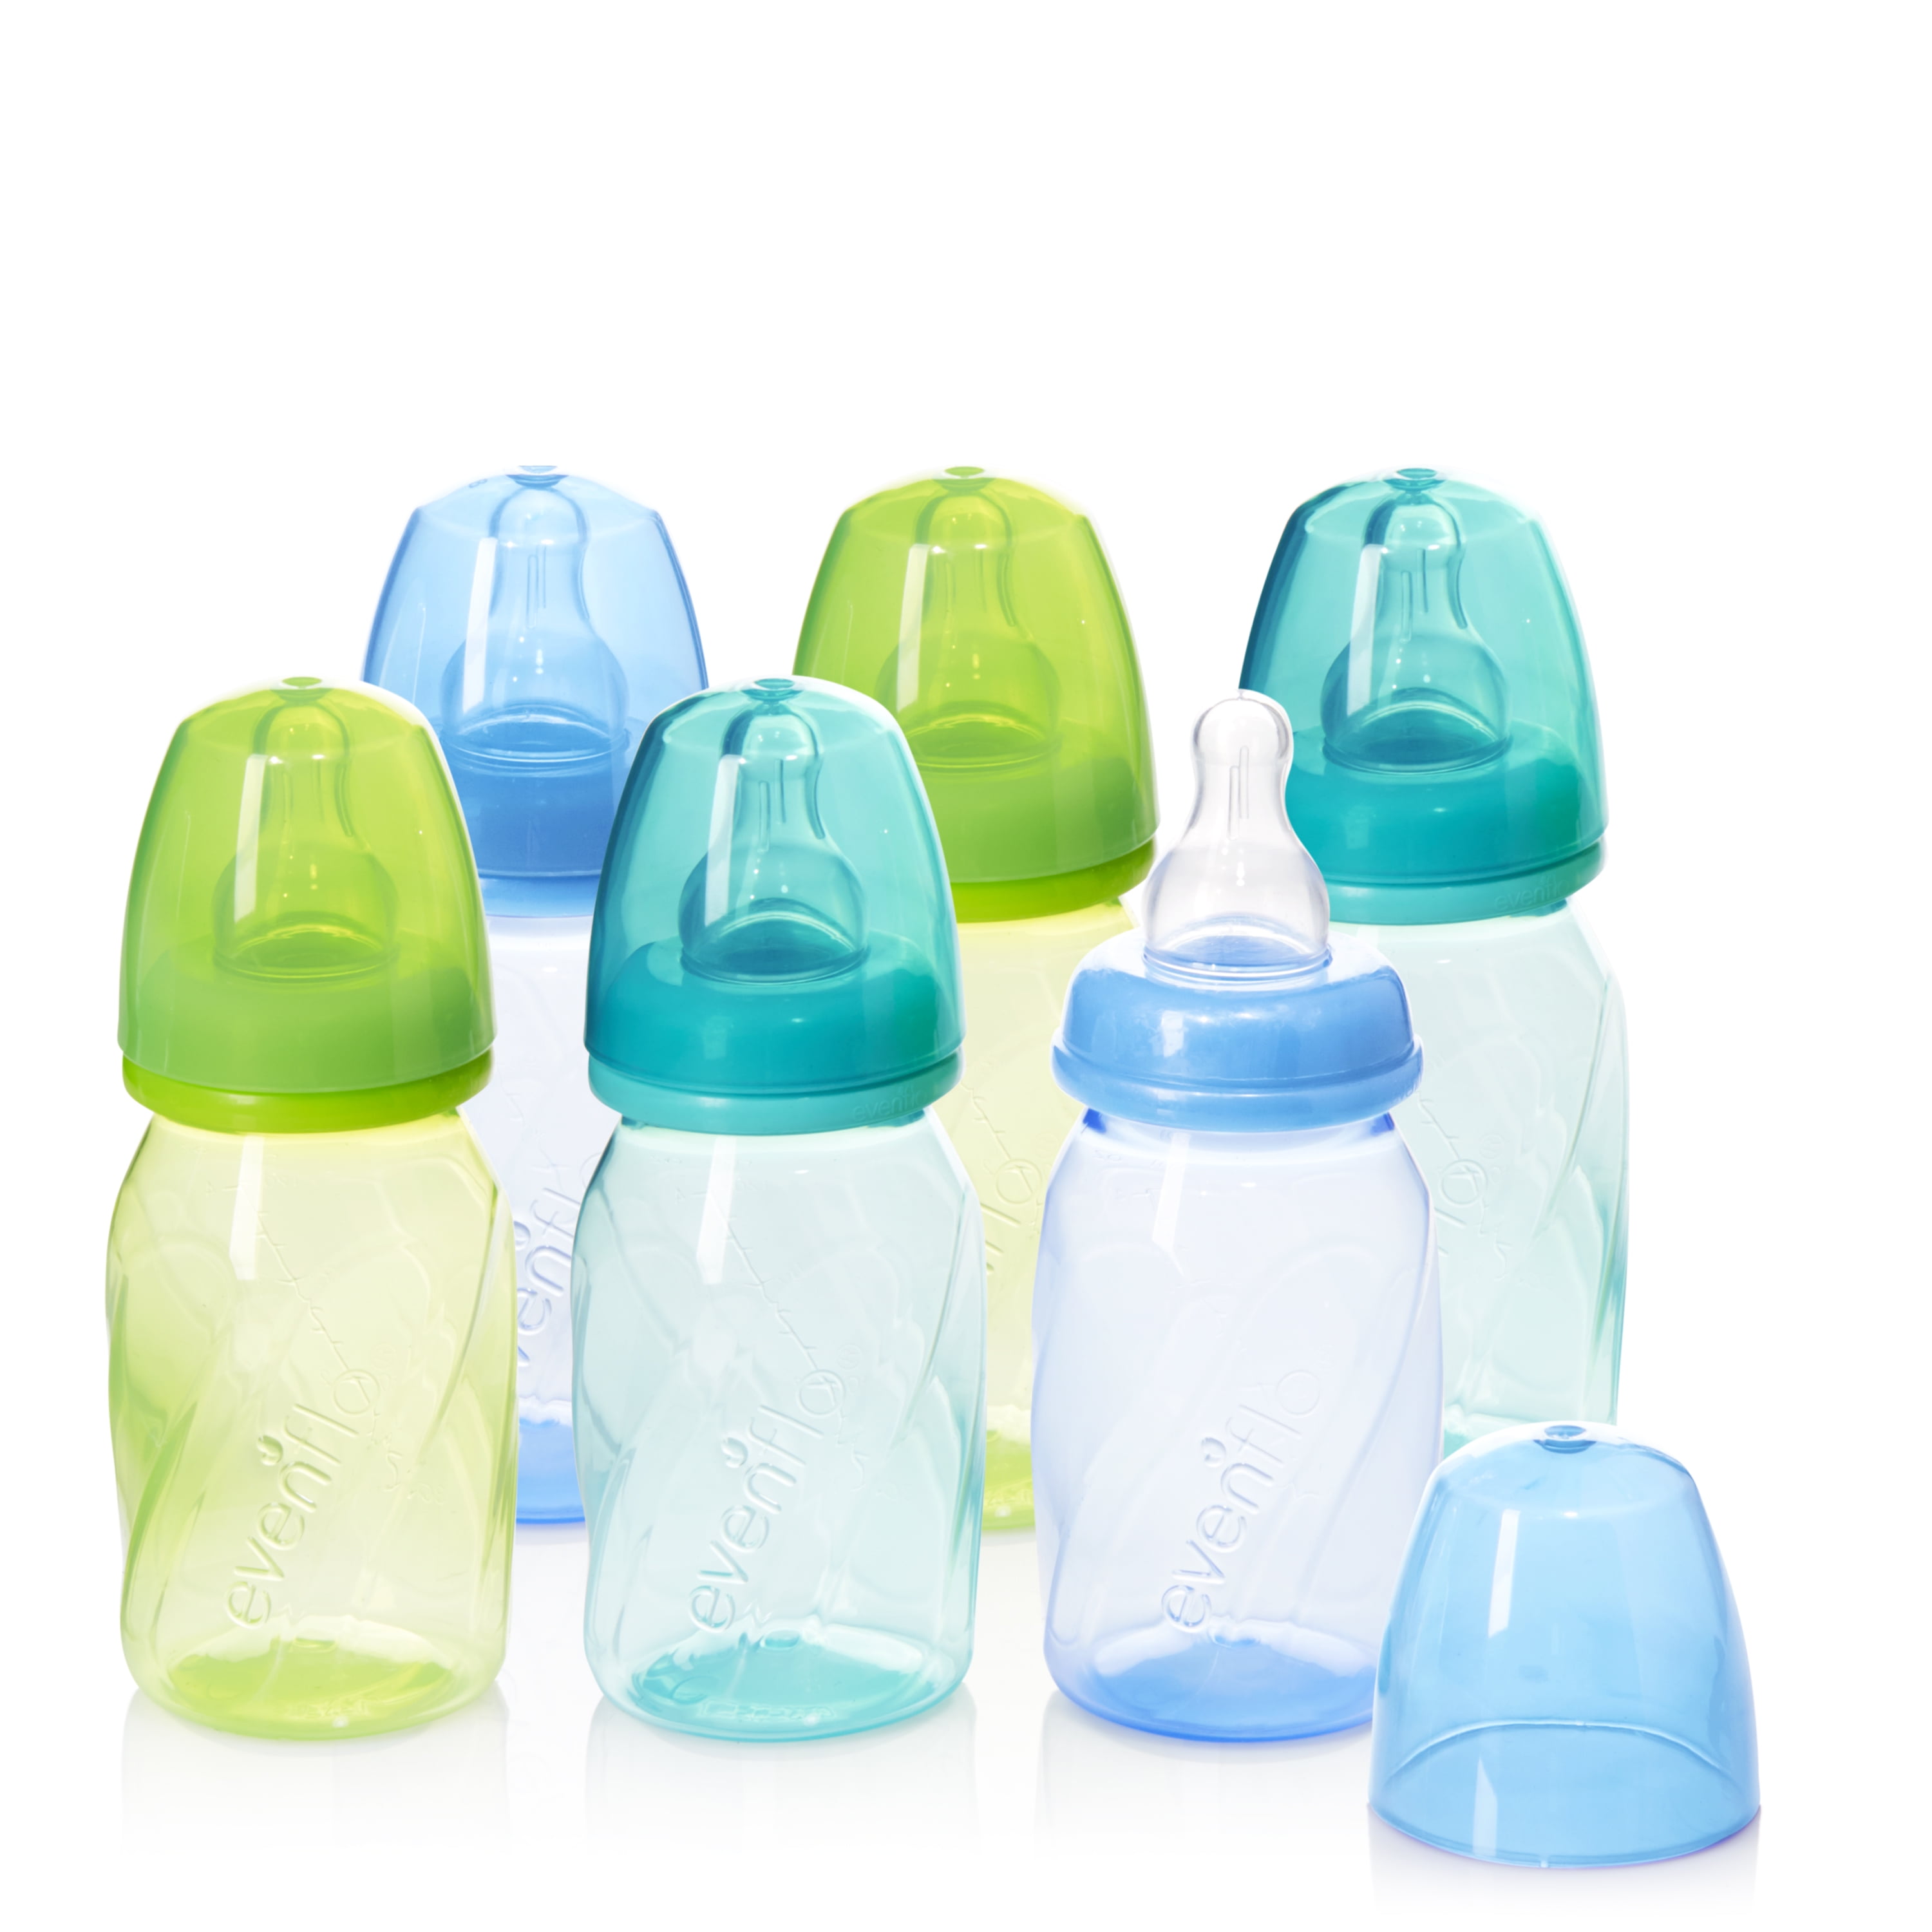 4oz baby bottles